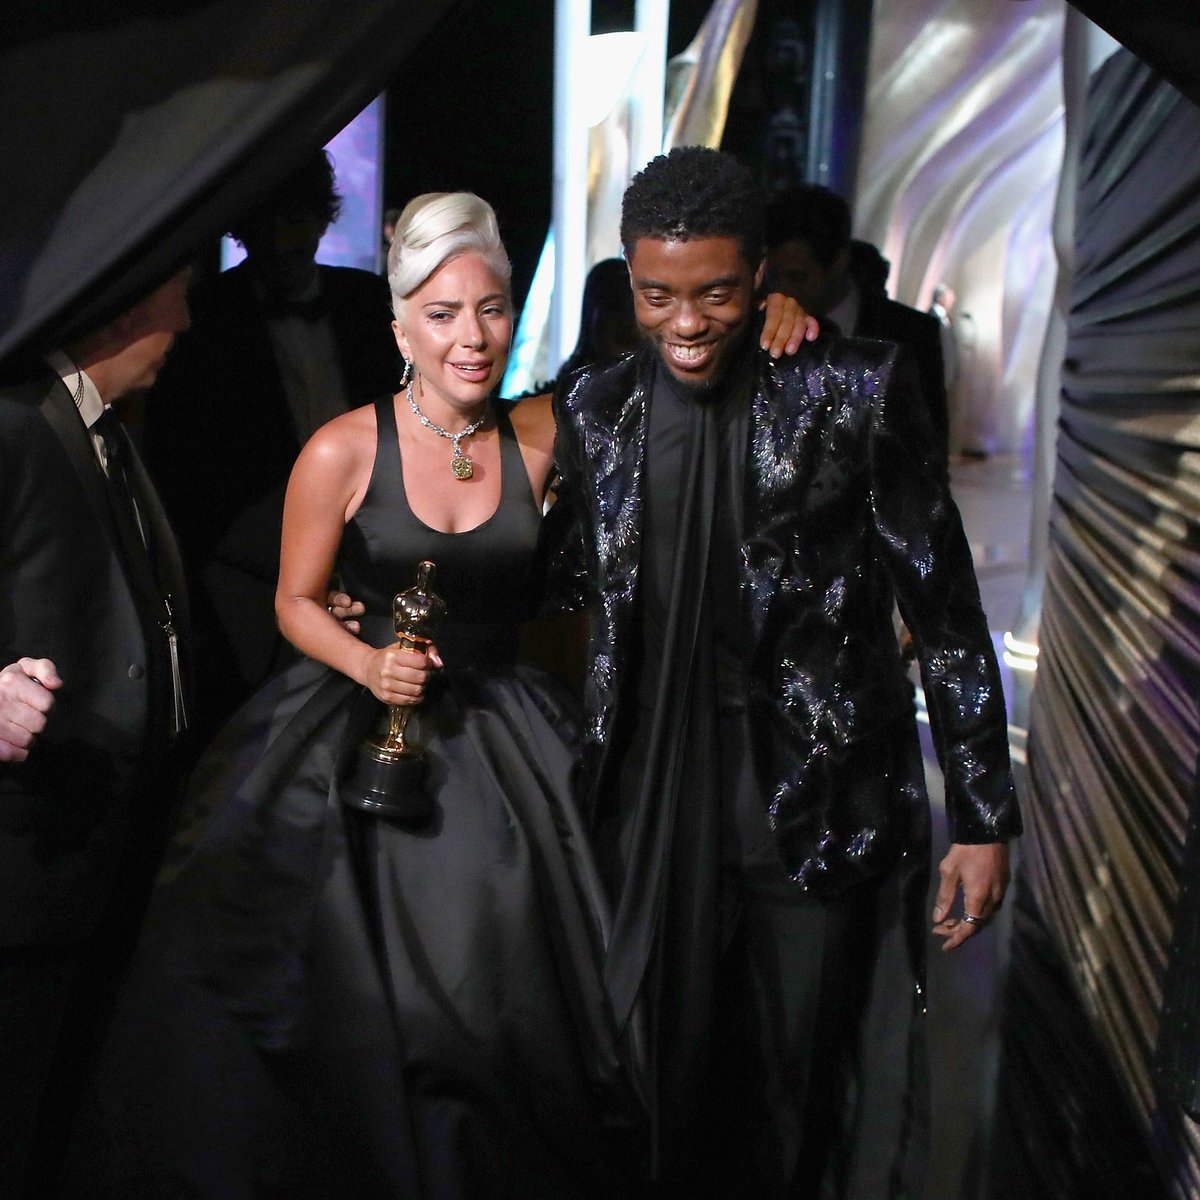 RT @gagavisuaI: Lady Gaga and Chadwick Boseman at the #Oscars 2019 https://t.co/umT0GOFuNF